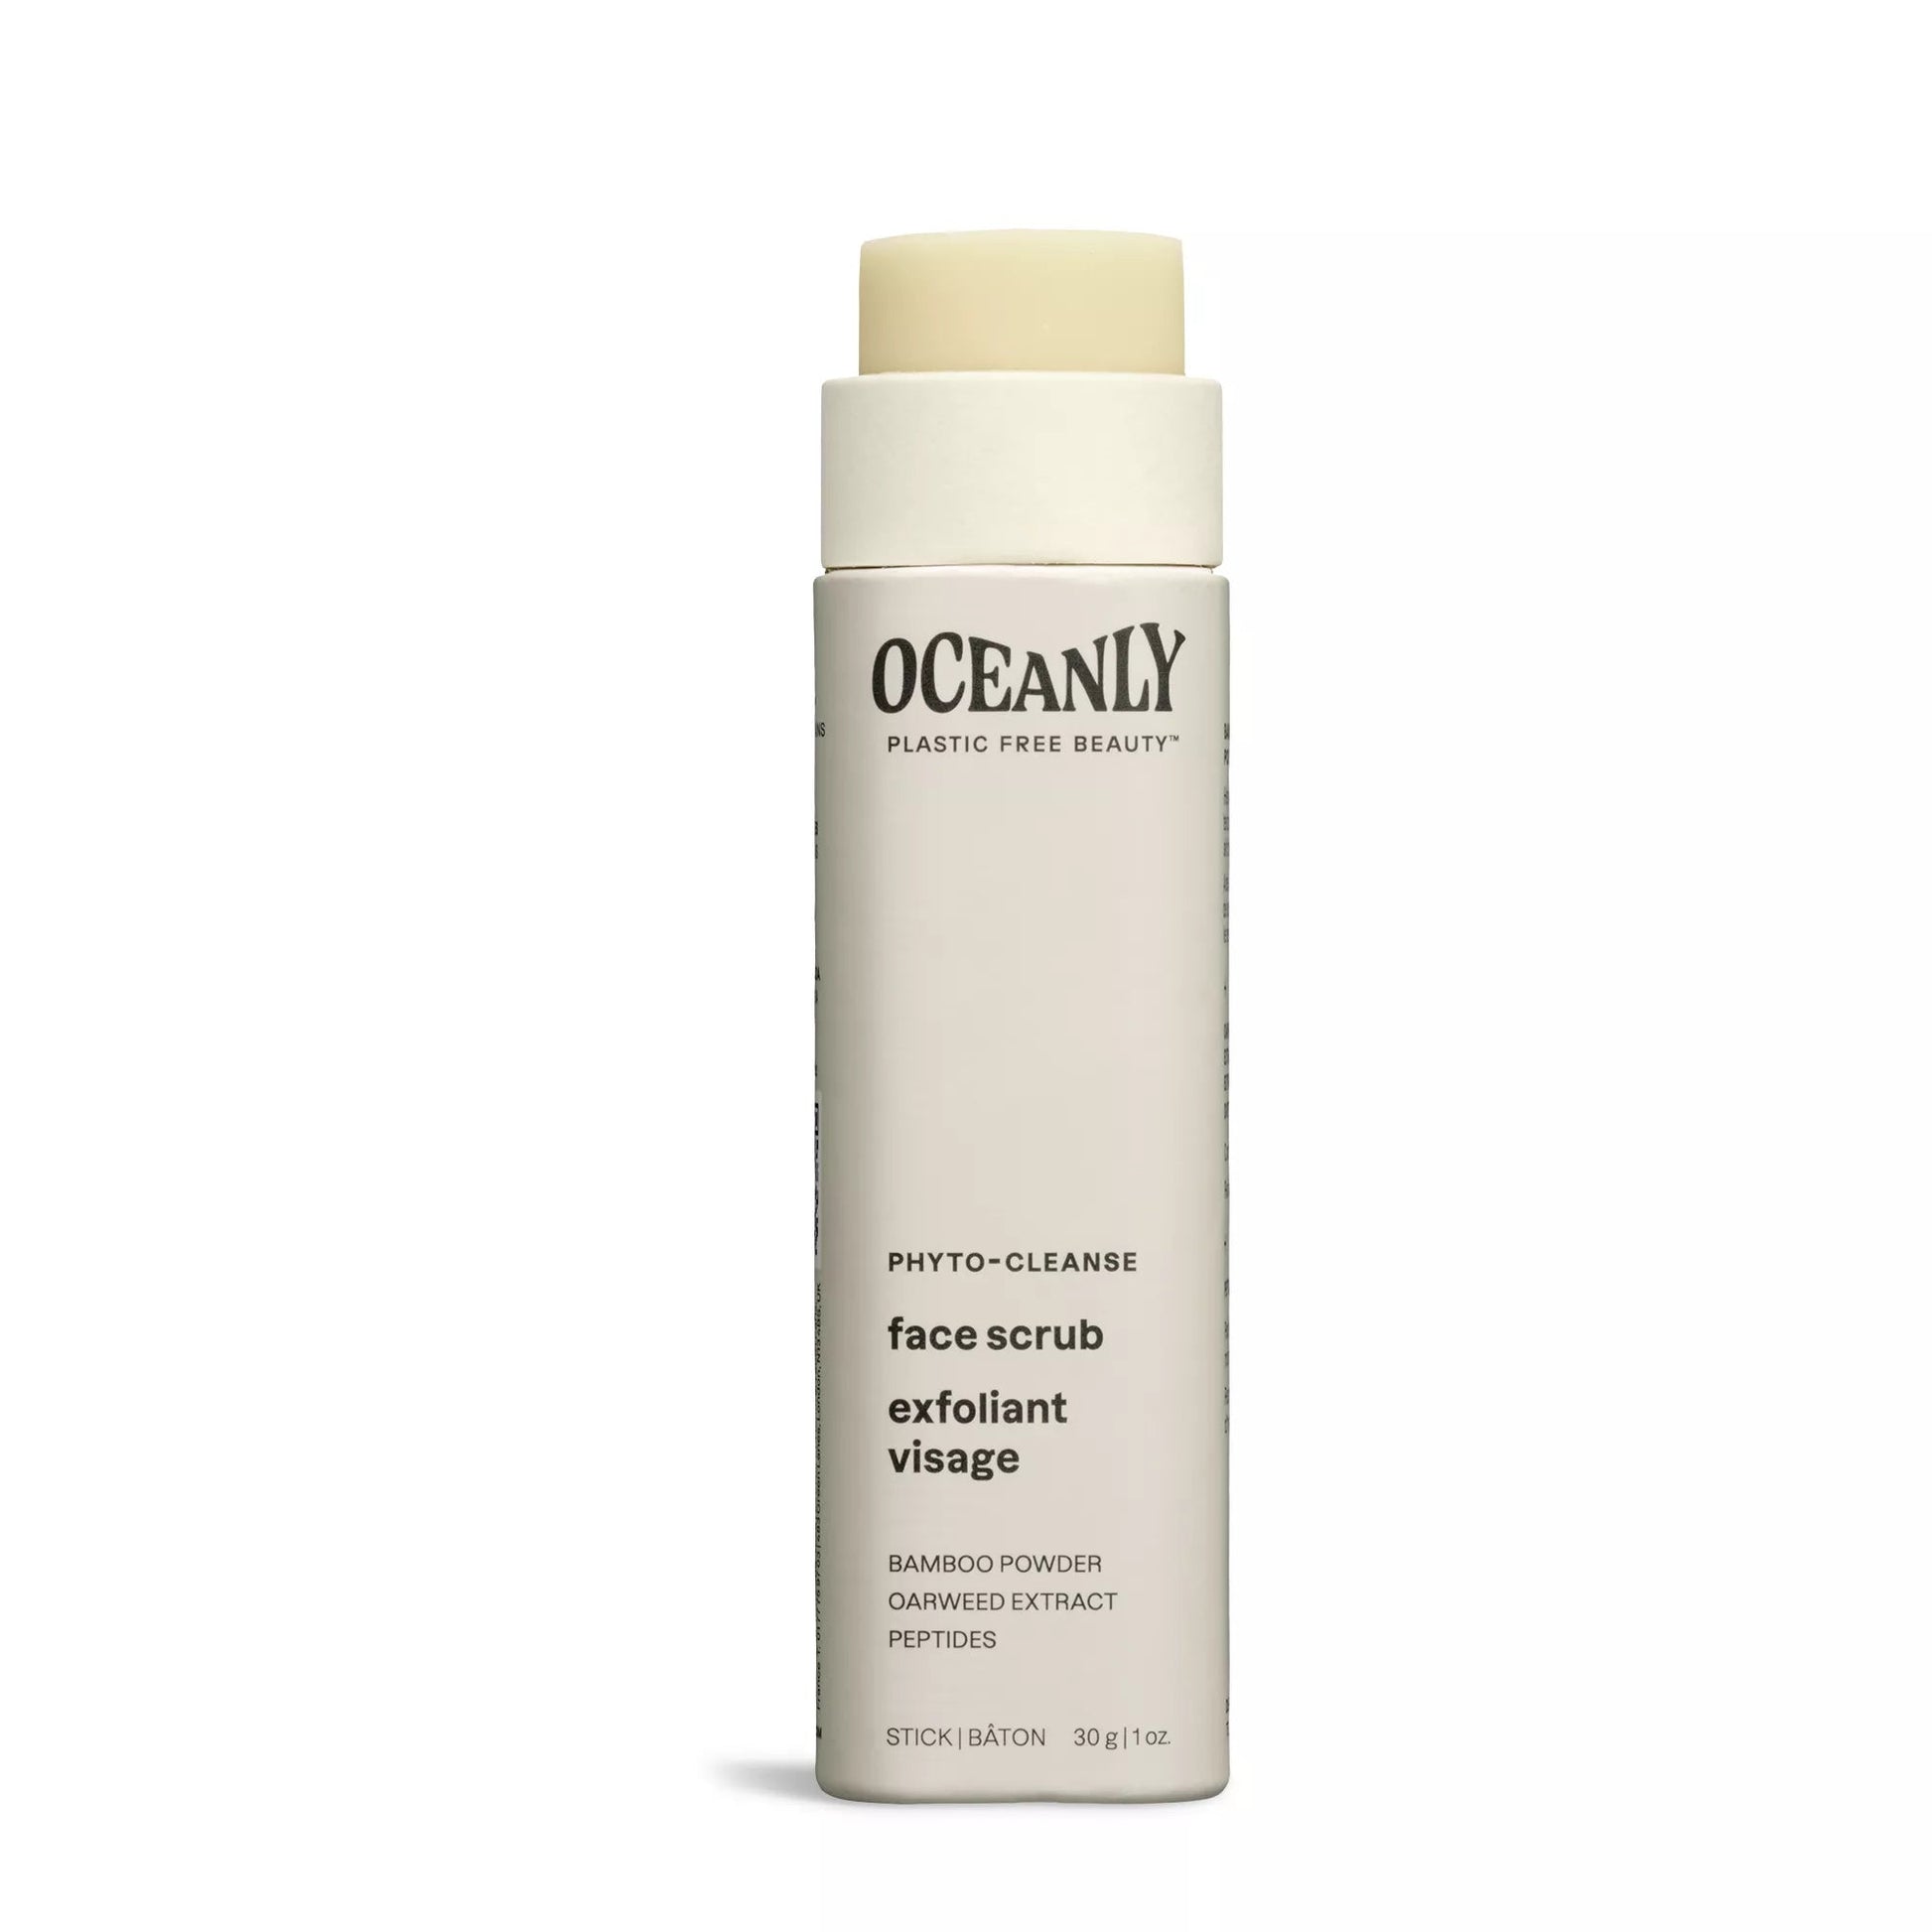 ATTITUDE oceanly phyto-cleanse exfoliant visage 16065_fr? 30g Sans odeur